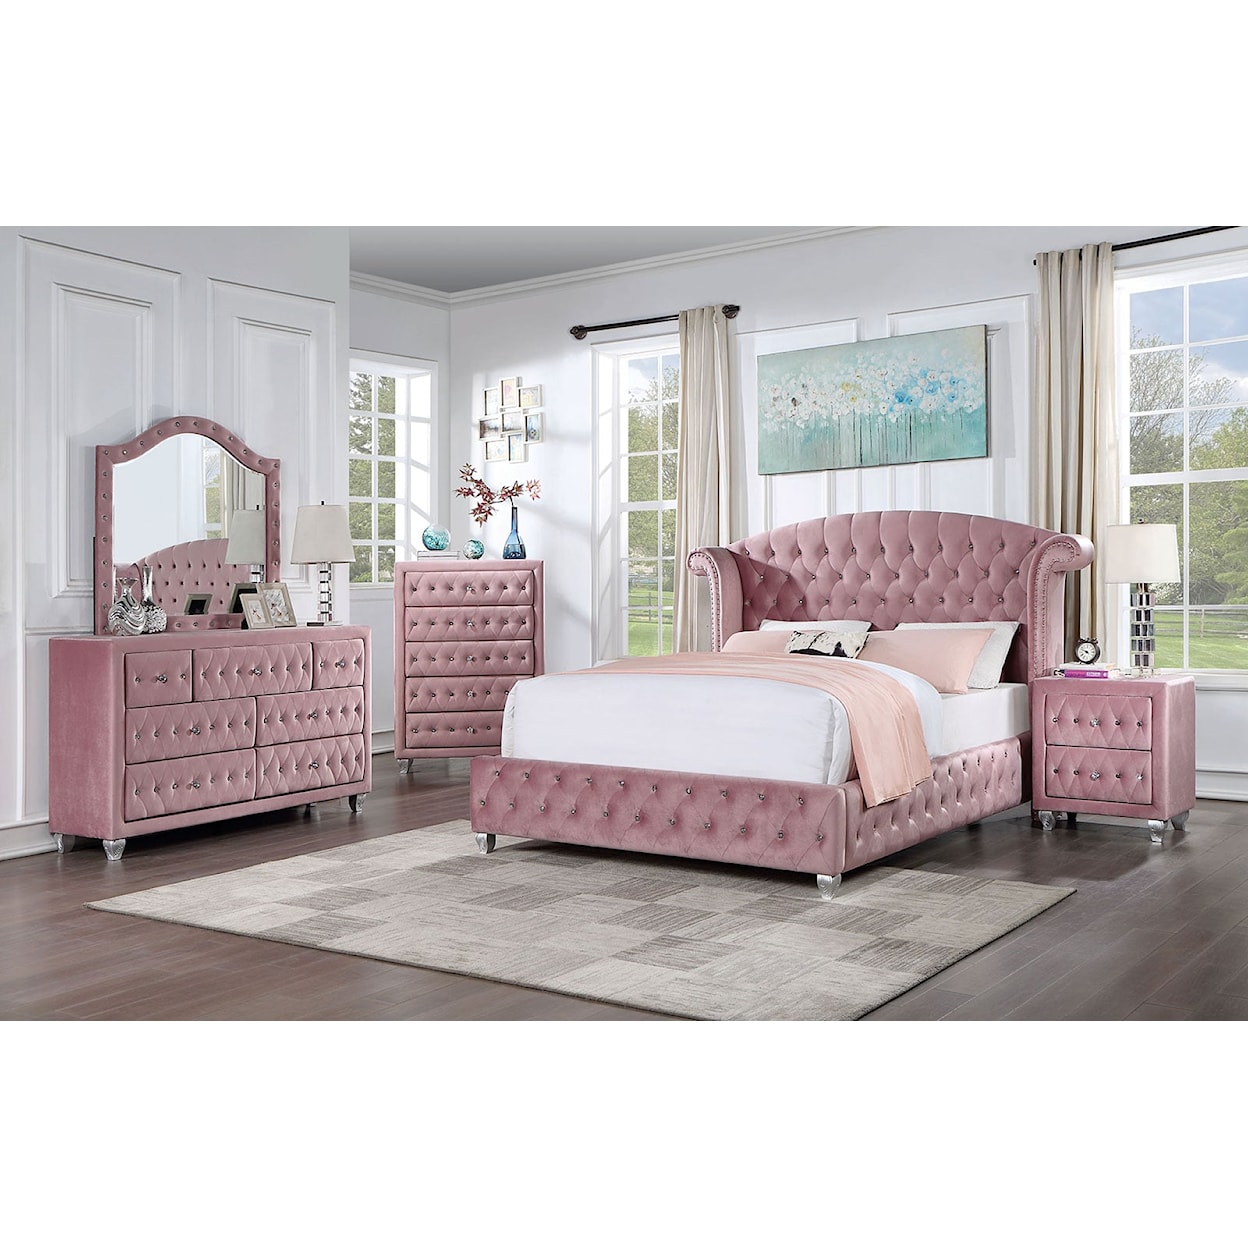 Furniture of America Zohar 4-Piece Full Bedroom Set